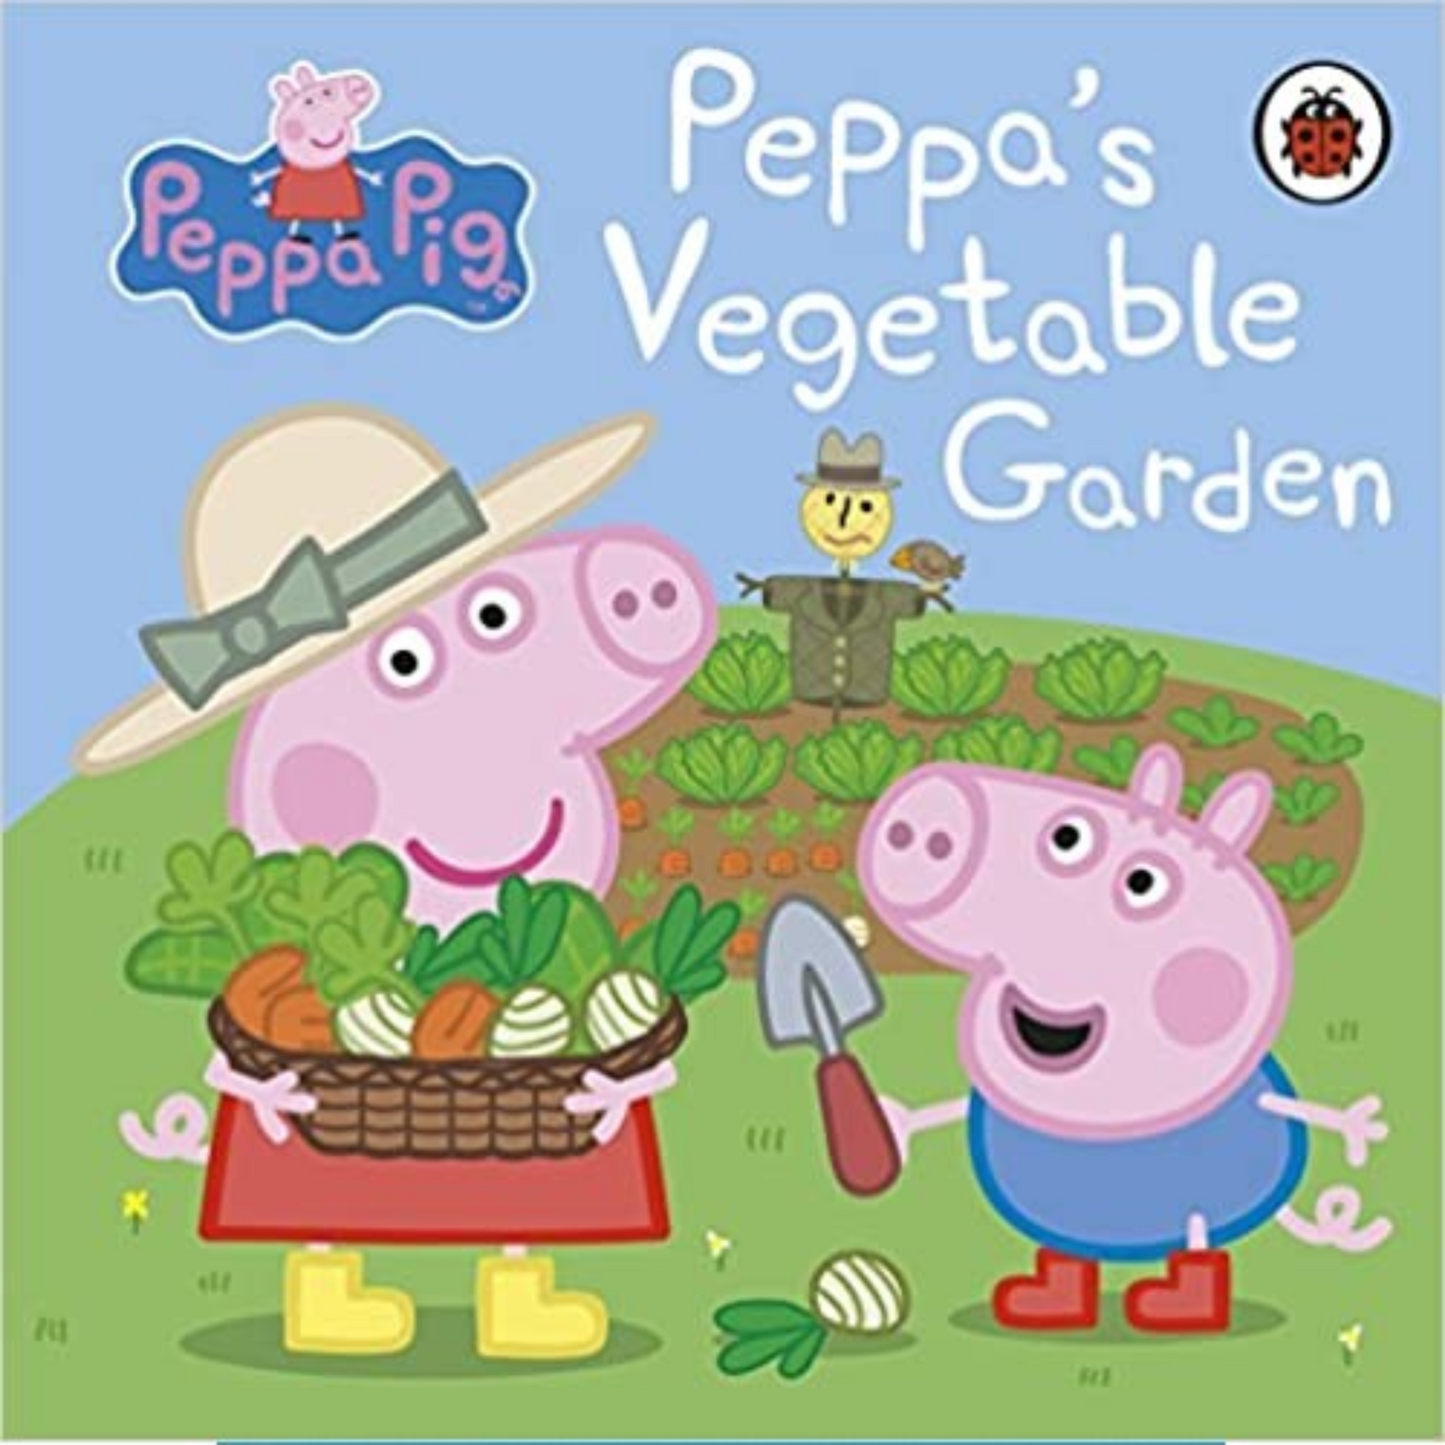 Peppa's Vegetable Garden Board Book - Interest age 2-5 Years